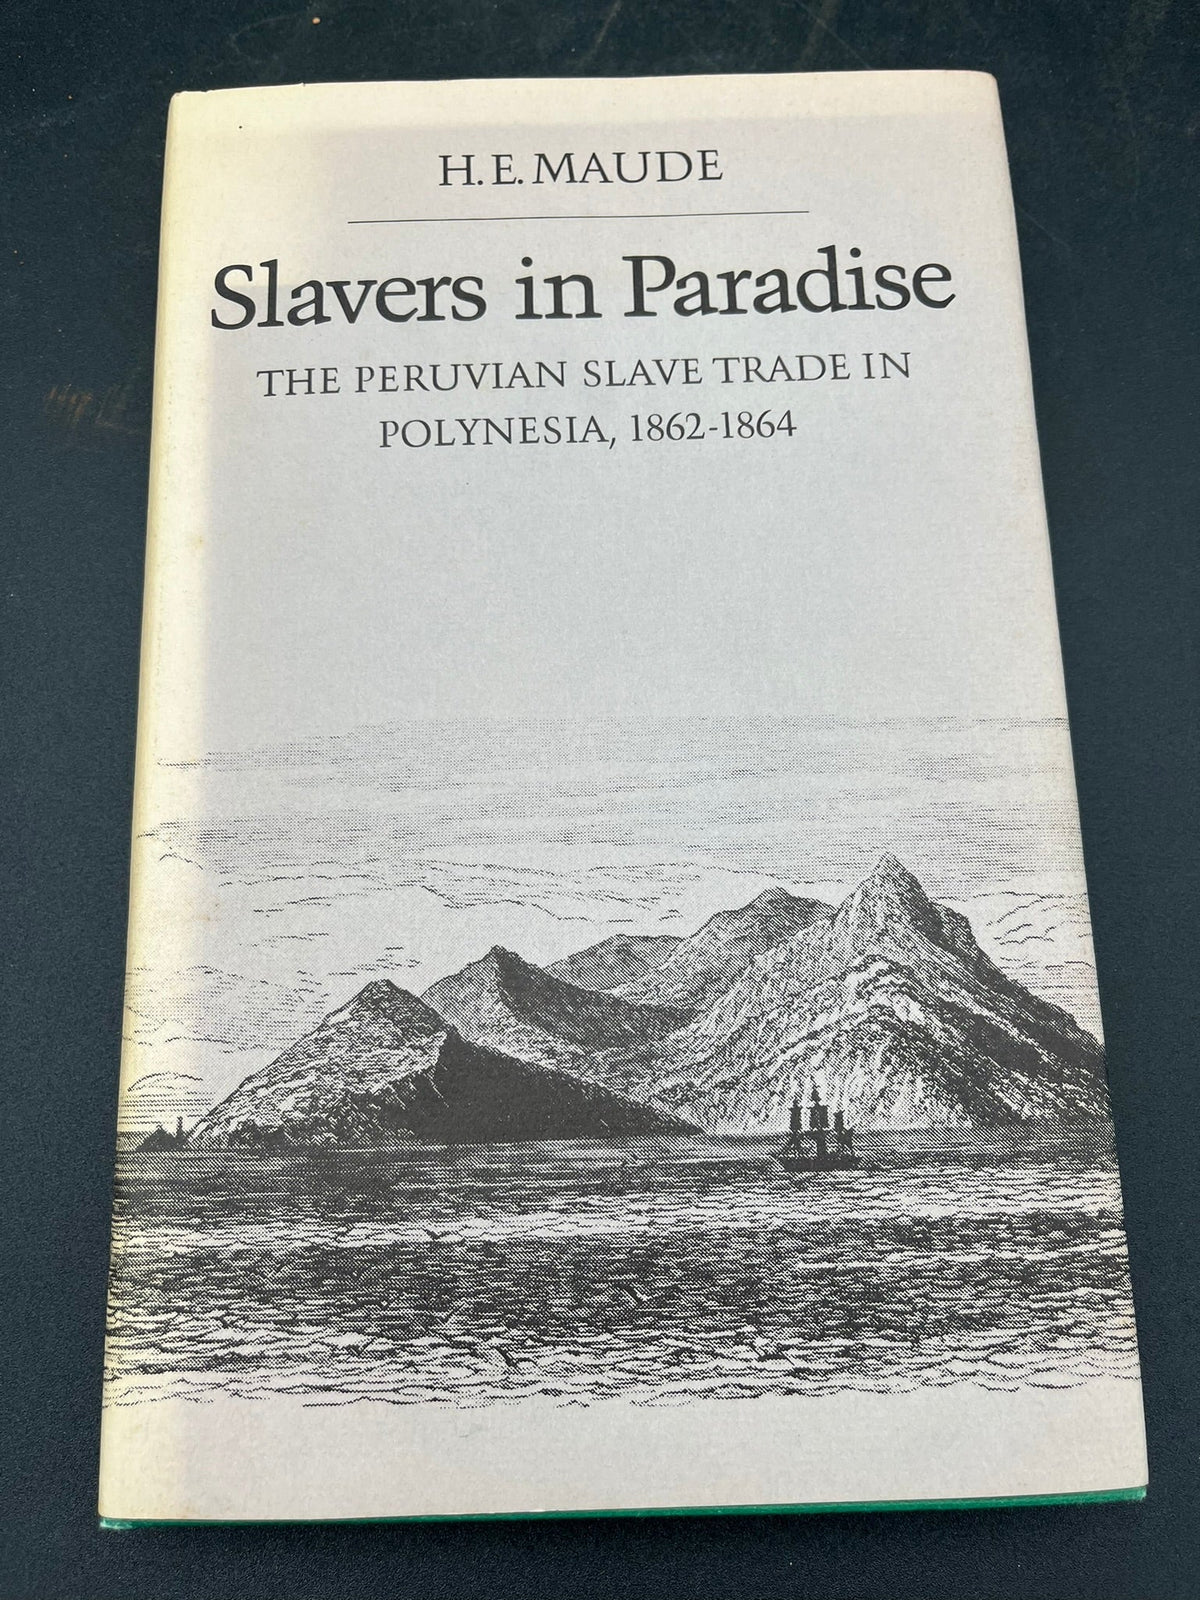 Slavers in Paradise